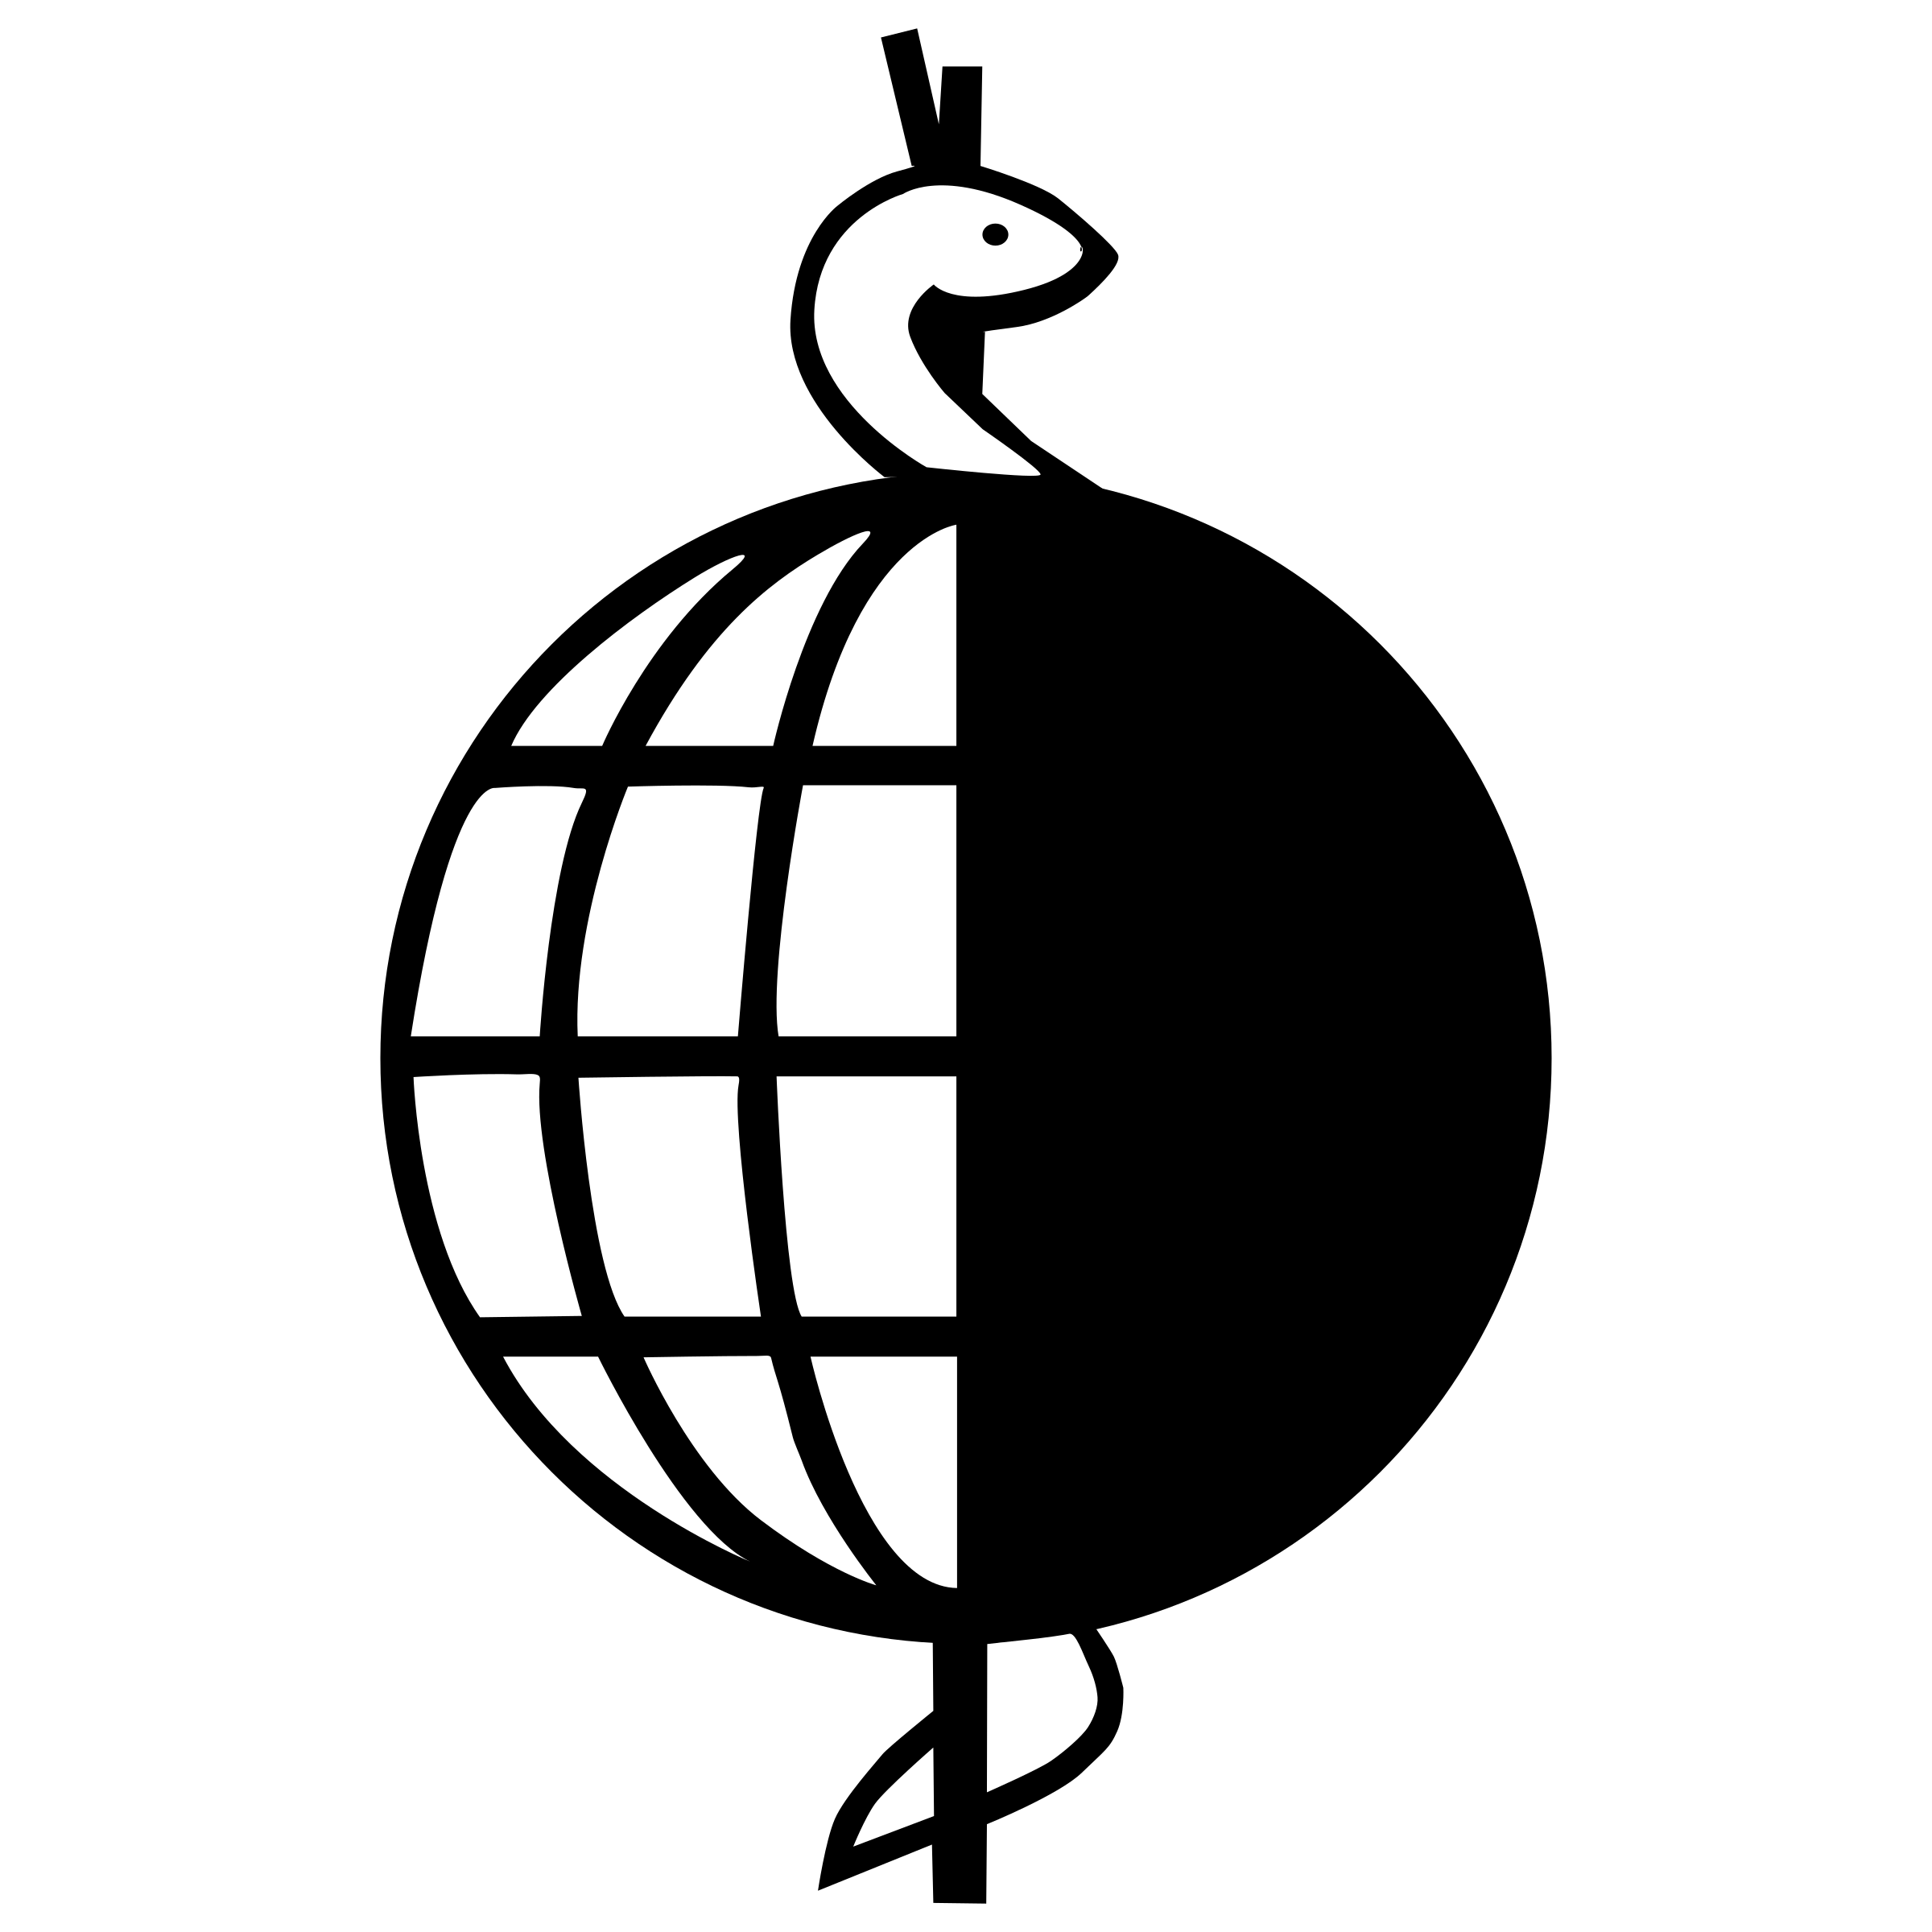 FA Davis Logo PNG Transparent & SVG Vector.